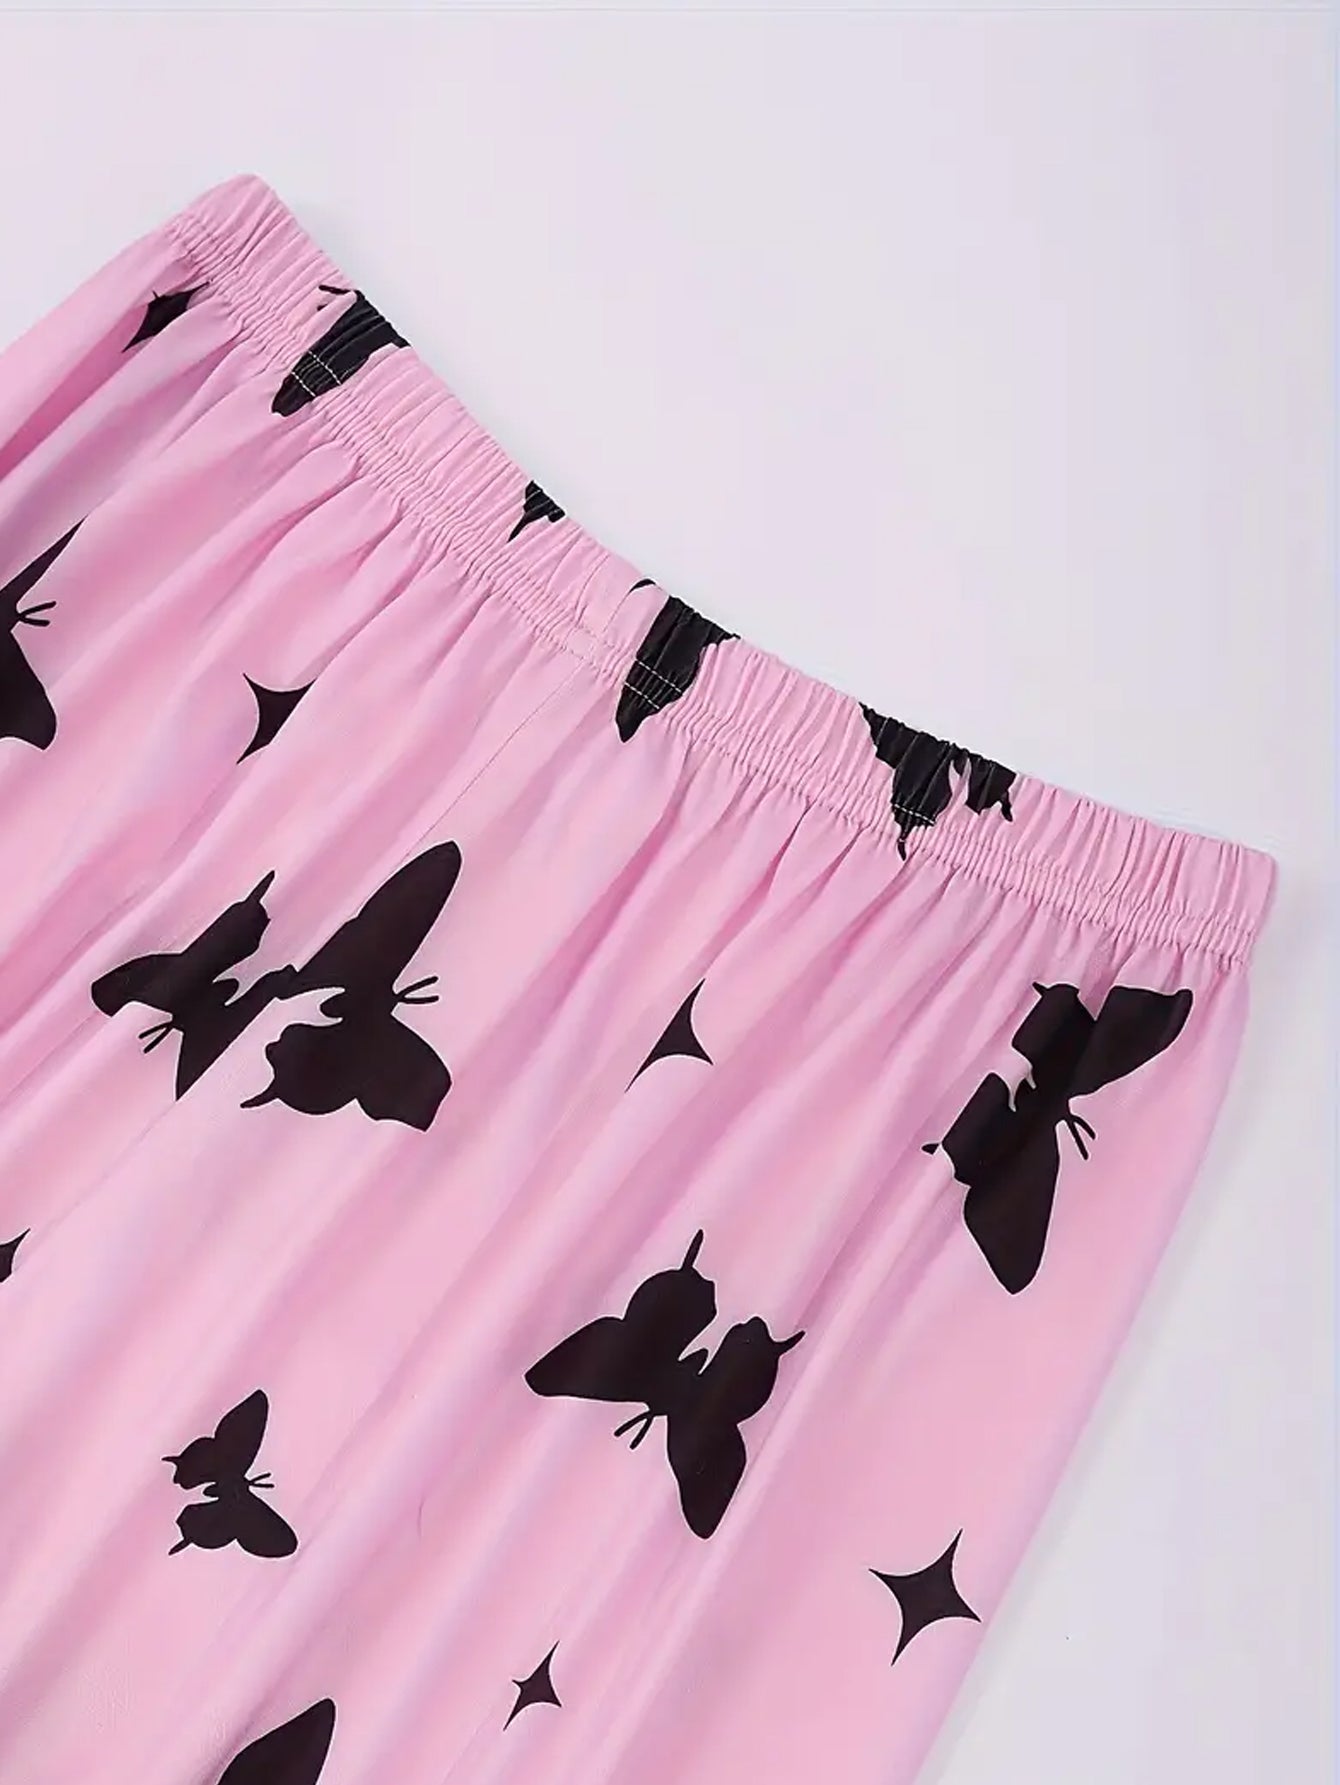 Heart Print Pajama Set - Pink